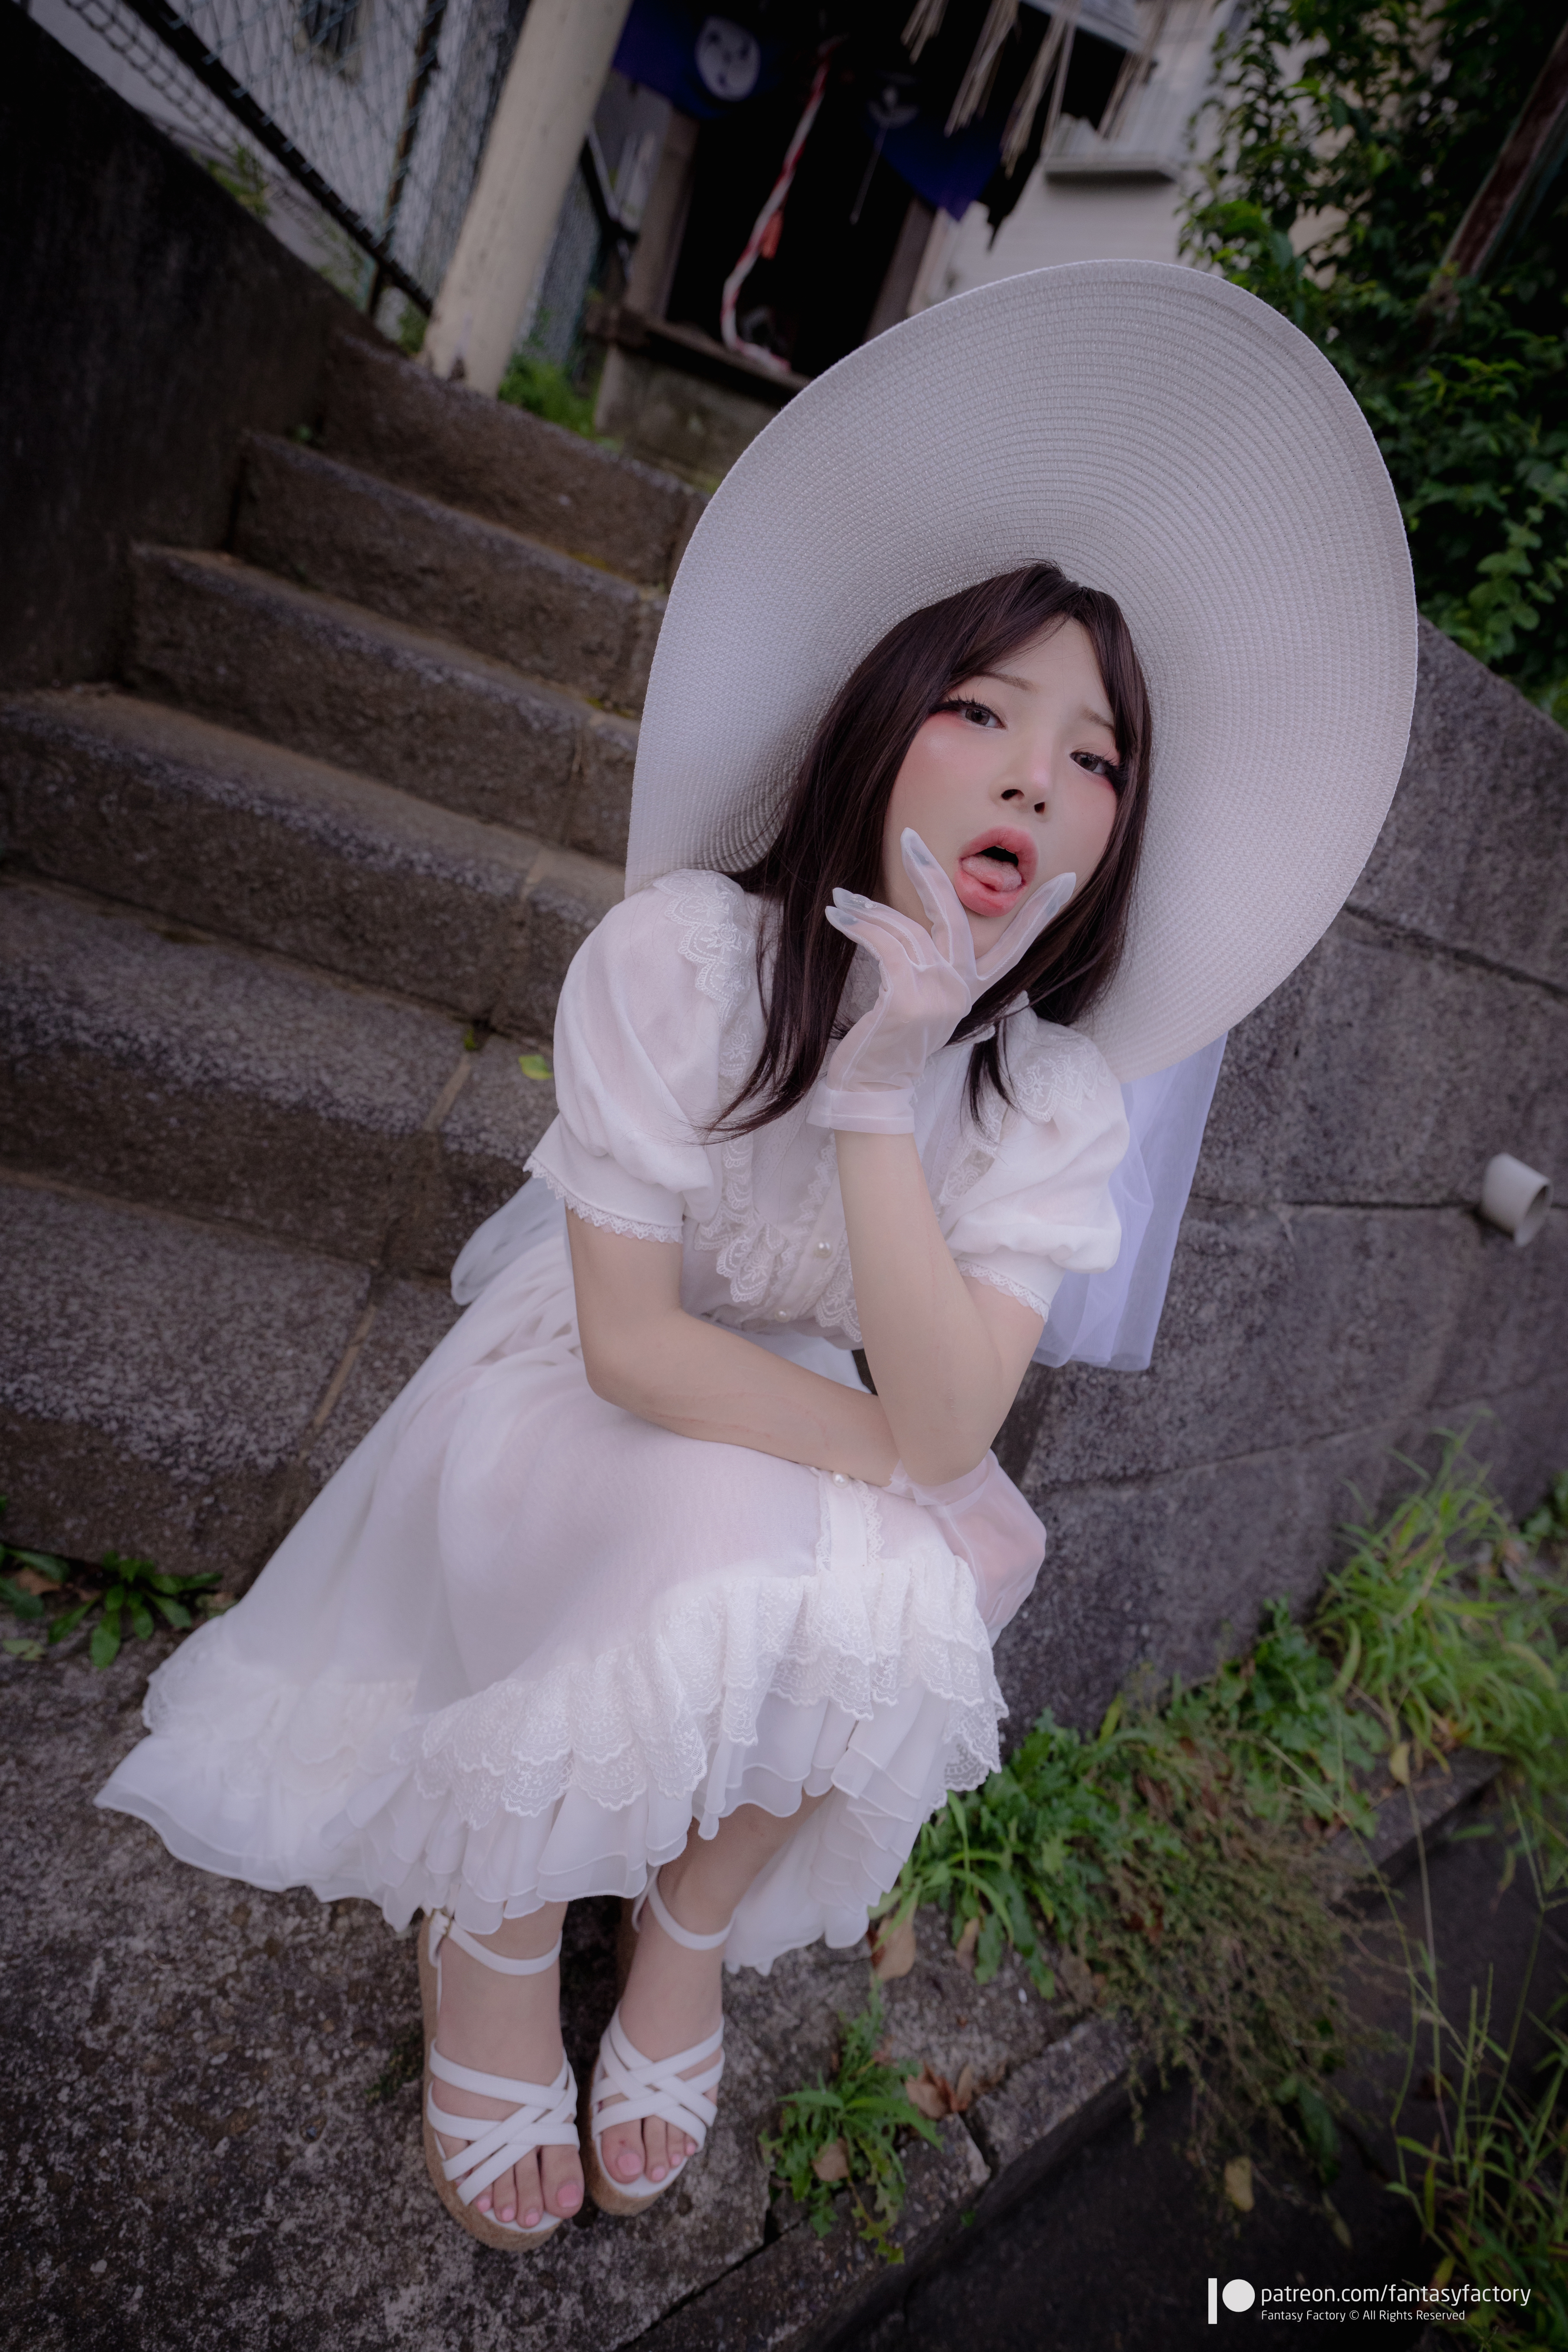 Women Model Asian Cosplay Women With Hats Dress White Clothing Women Outdoors Tongue Out 3840x5760